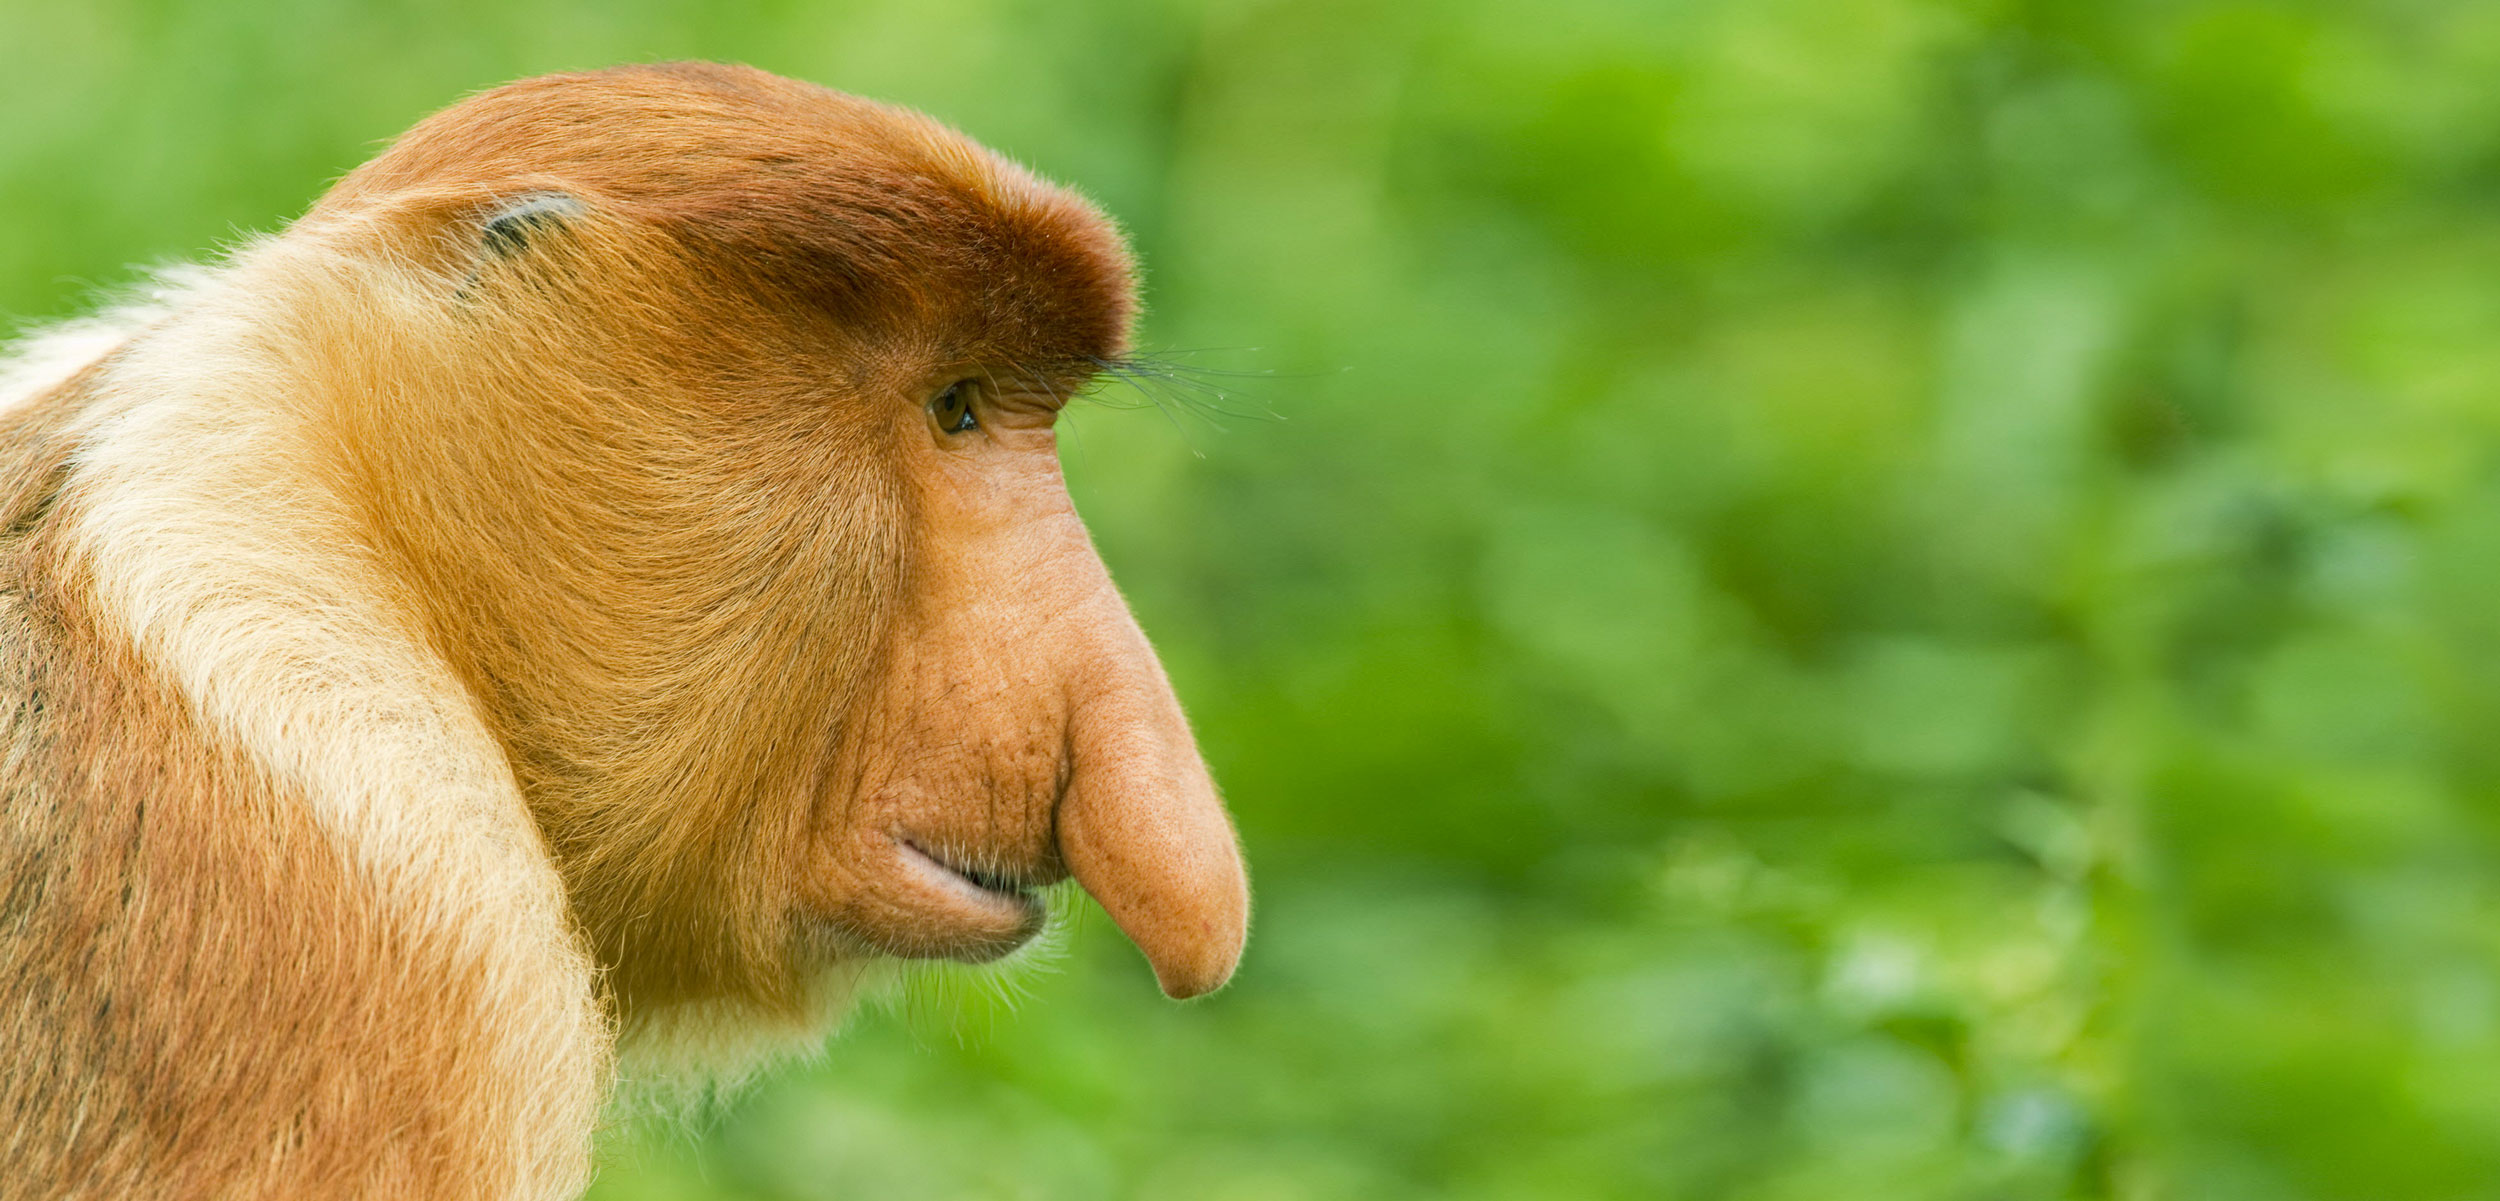 The Wonderful, Transcendent Life of an Odd-Nosed Monkey | Hakai Magazine